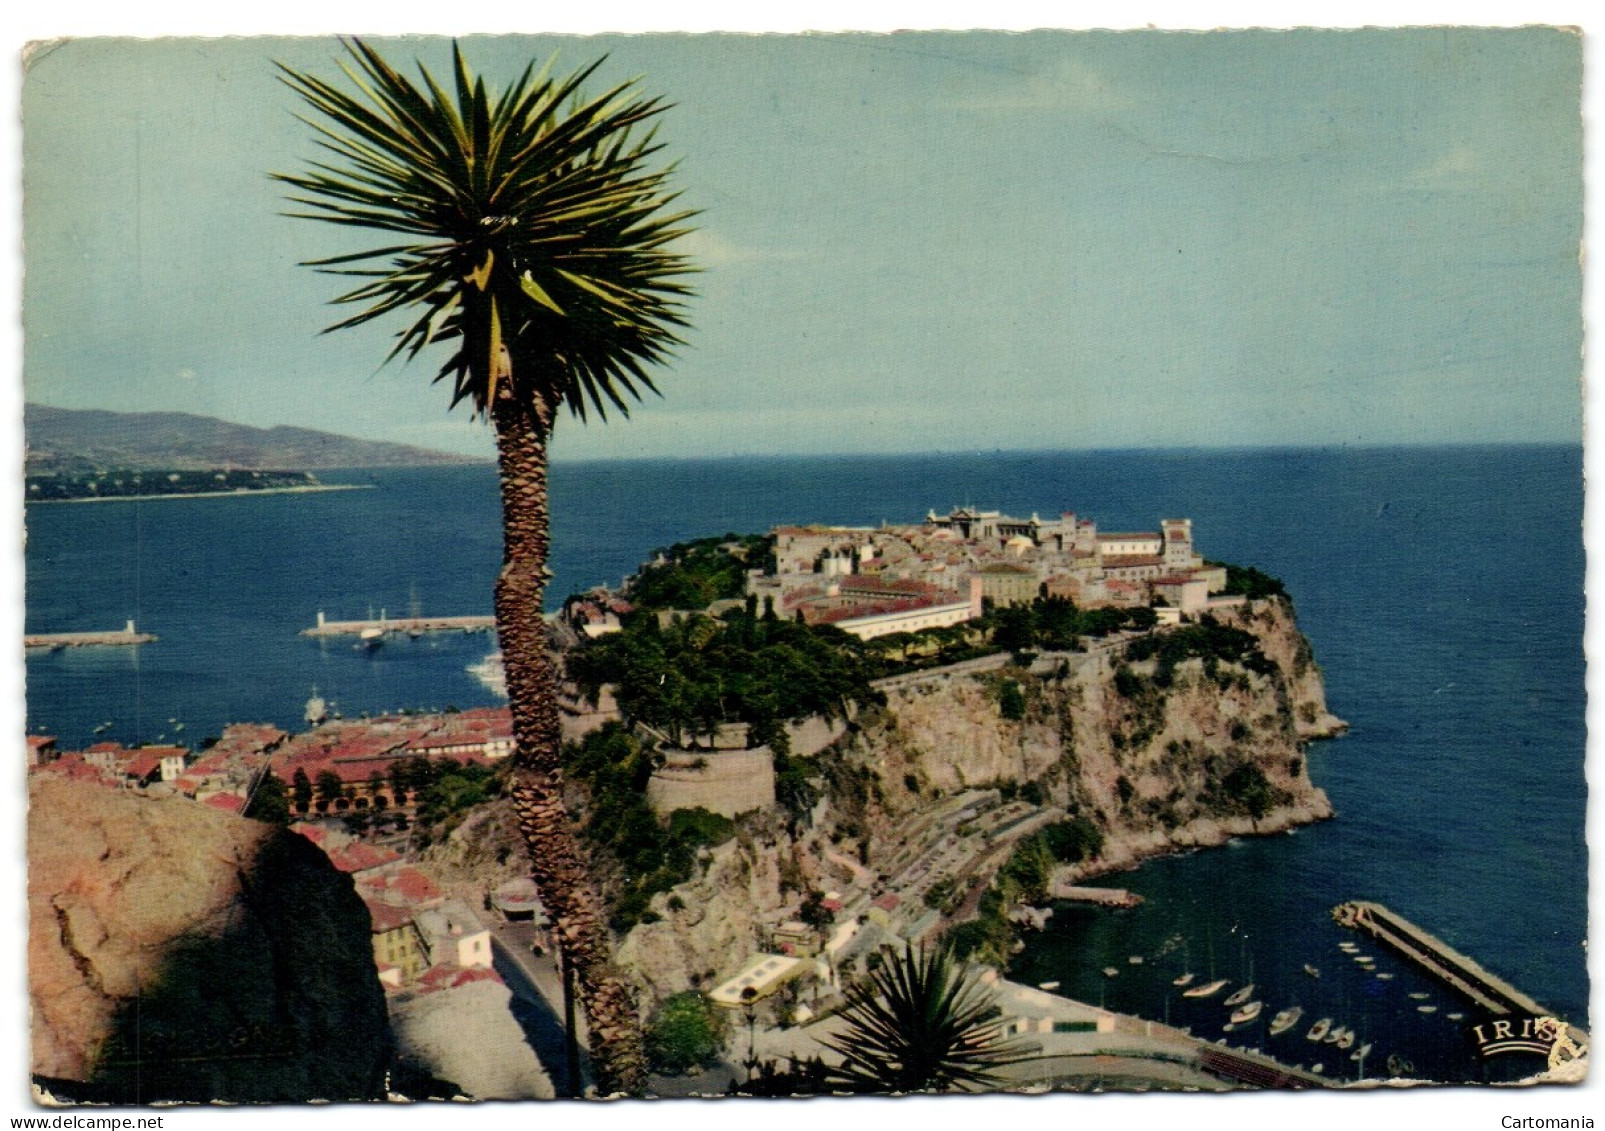 Principauté De Monaco - Le Rocher De Monaco Vu Du Jardin Exotique - Exotische Tuin